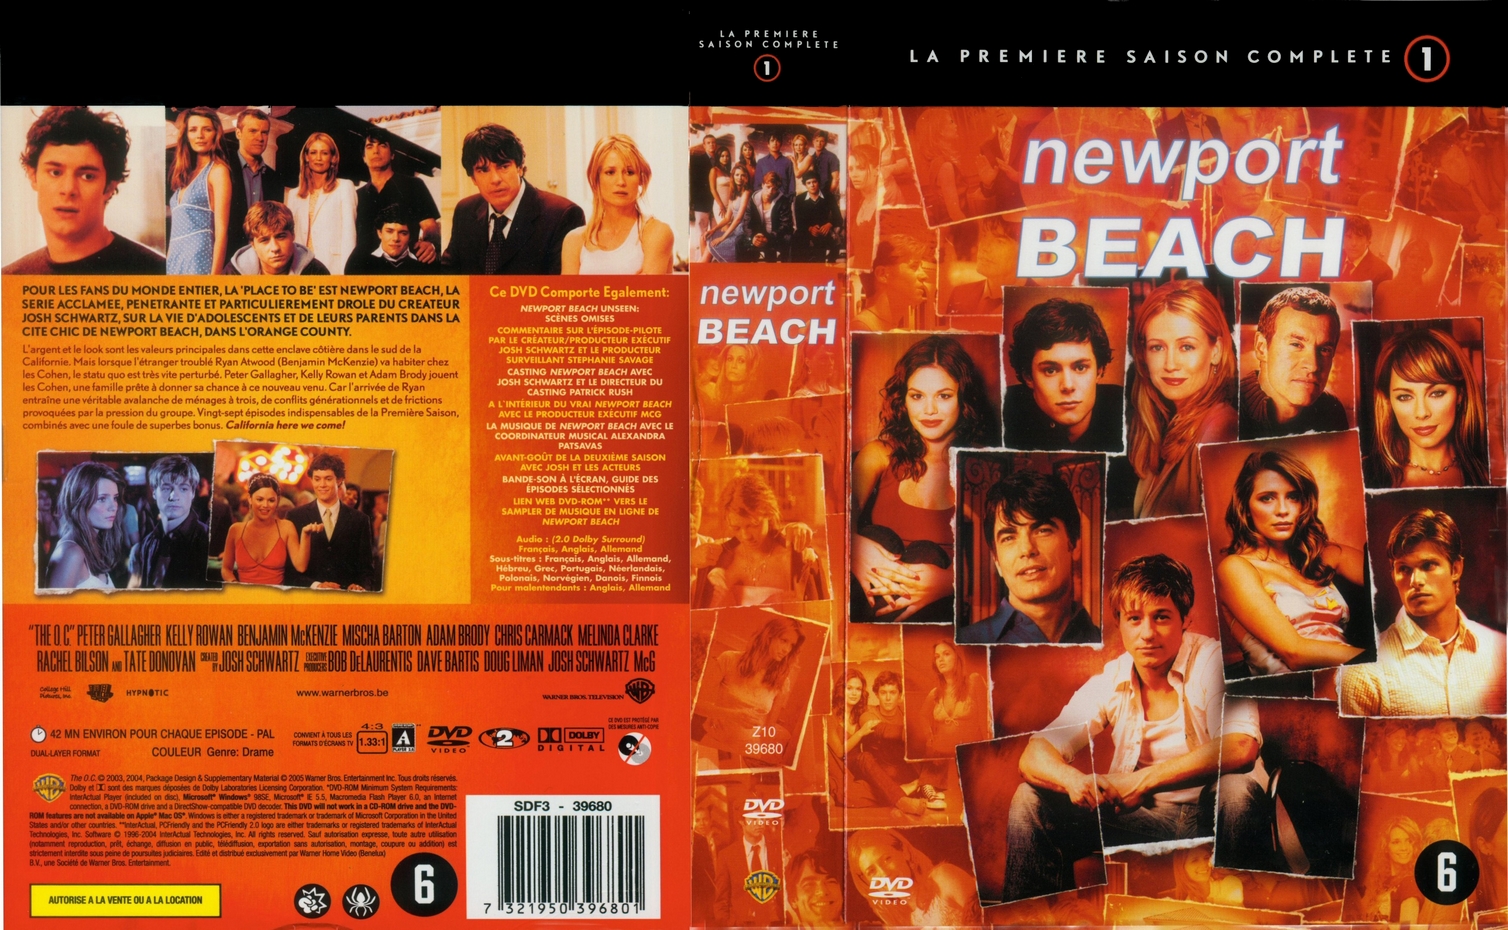 Jaquette DVD Newport beach Saison 1 COFFRET